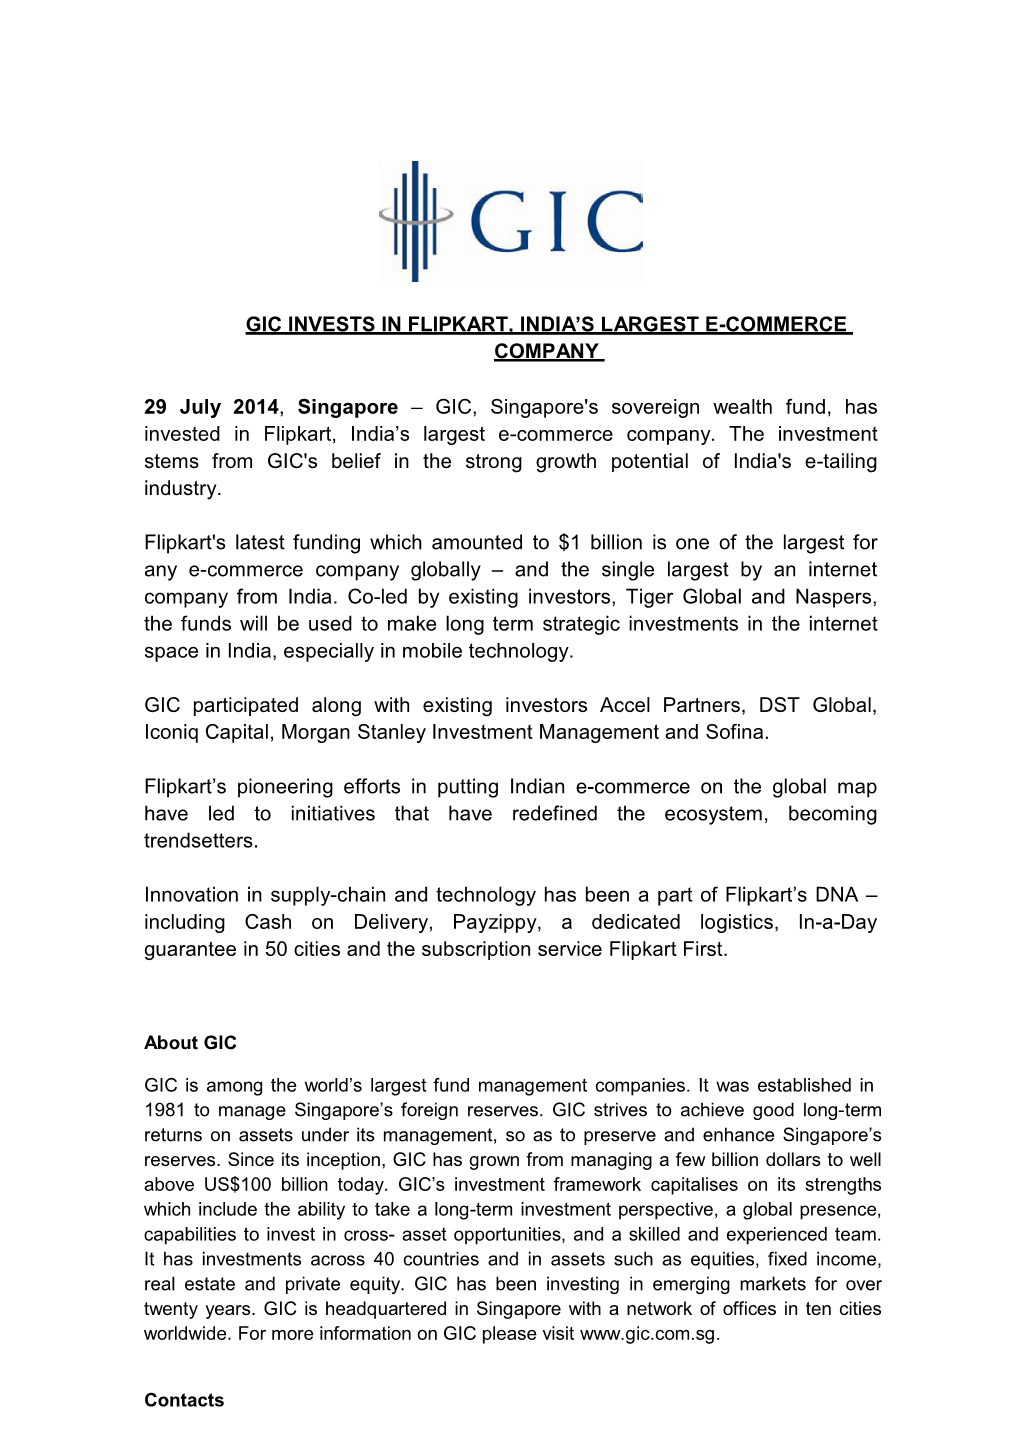 Gic Invests in Flipkart, India's Largest E-Commerce